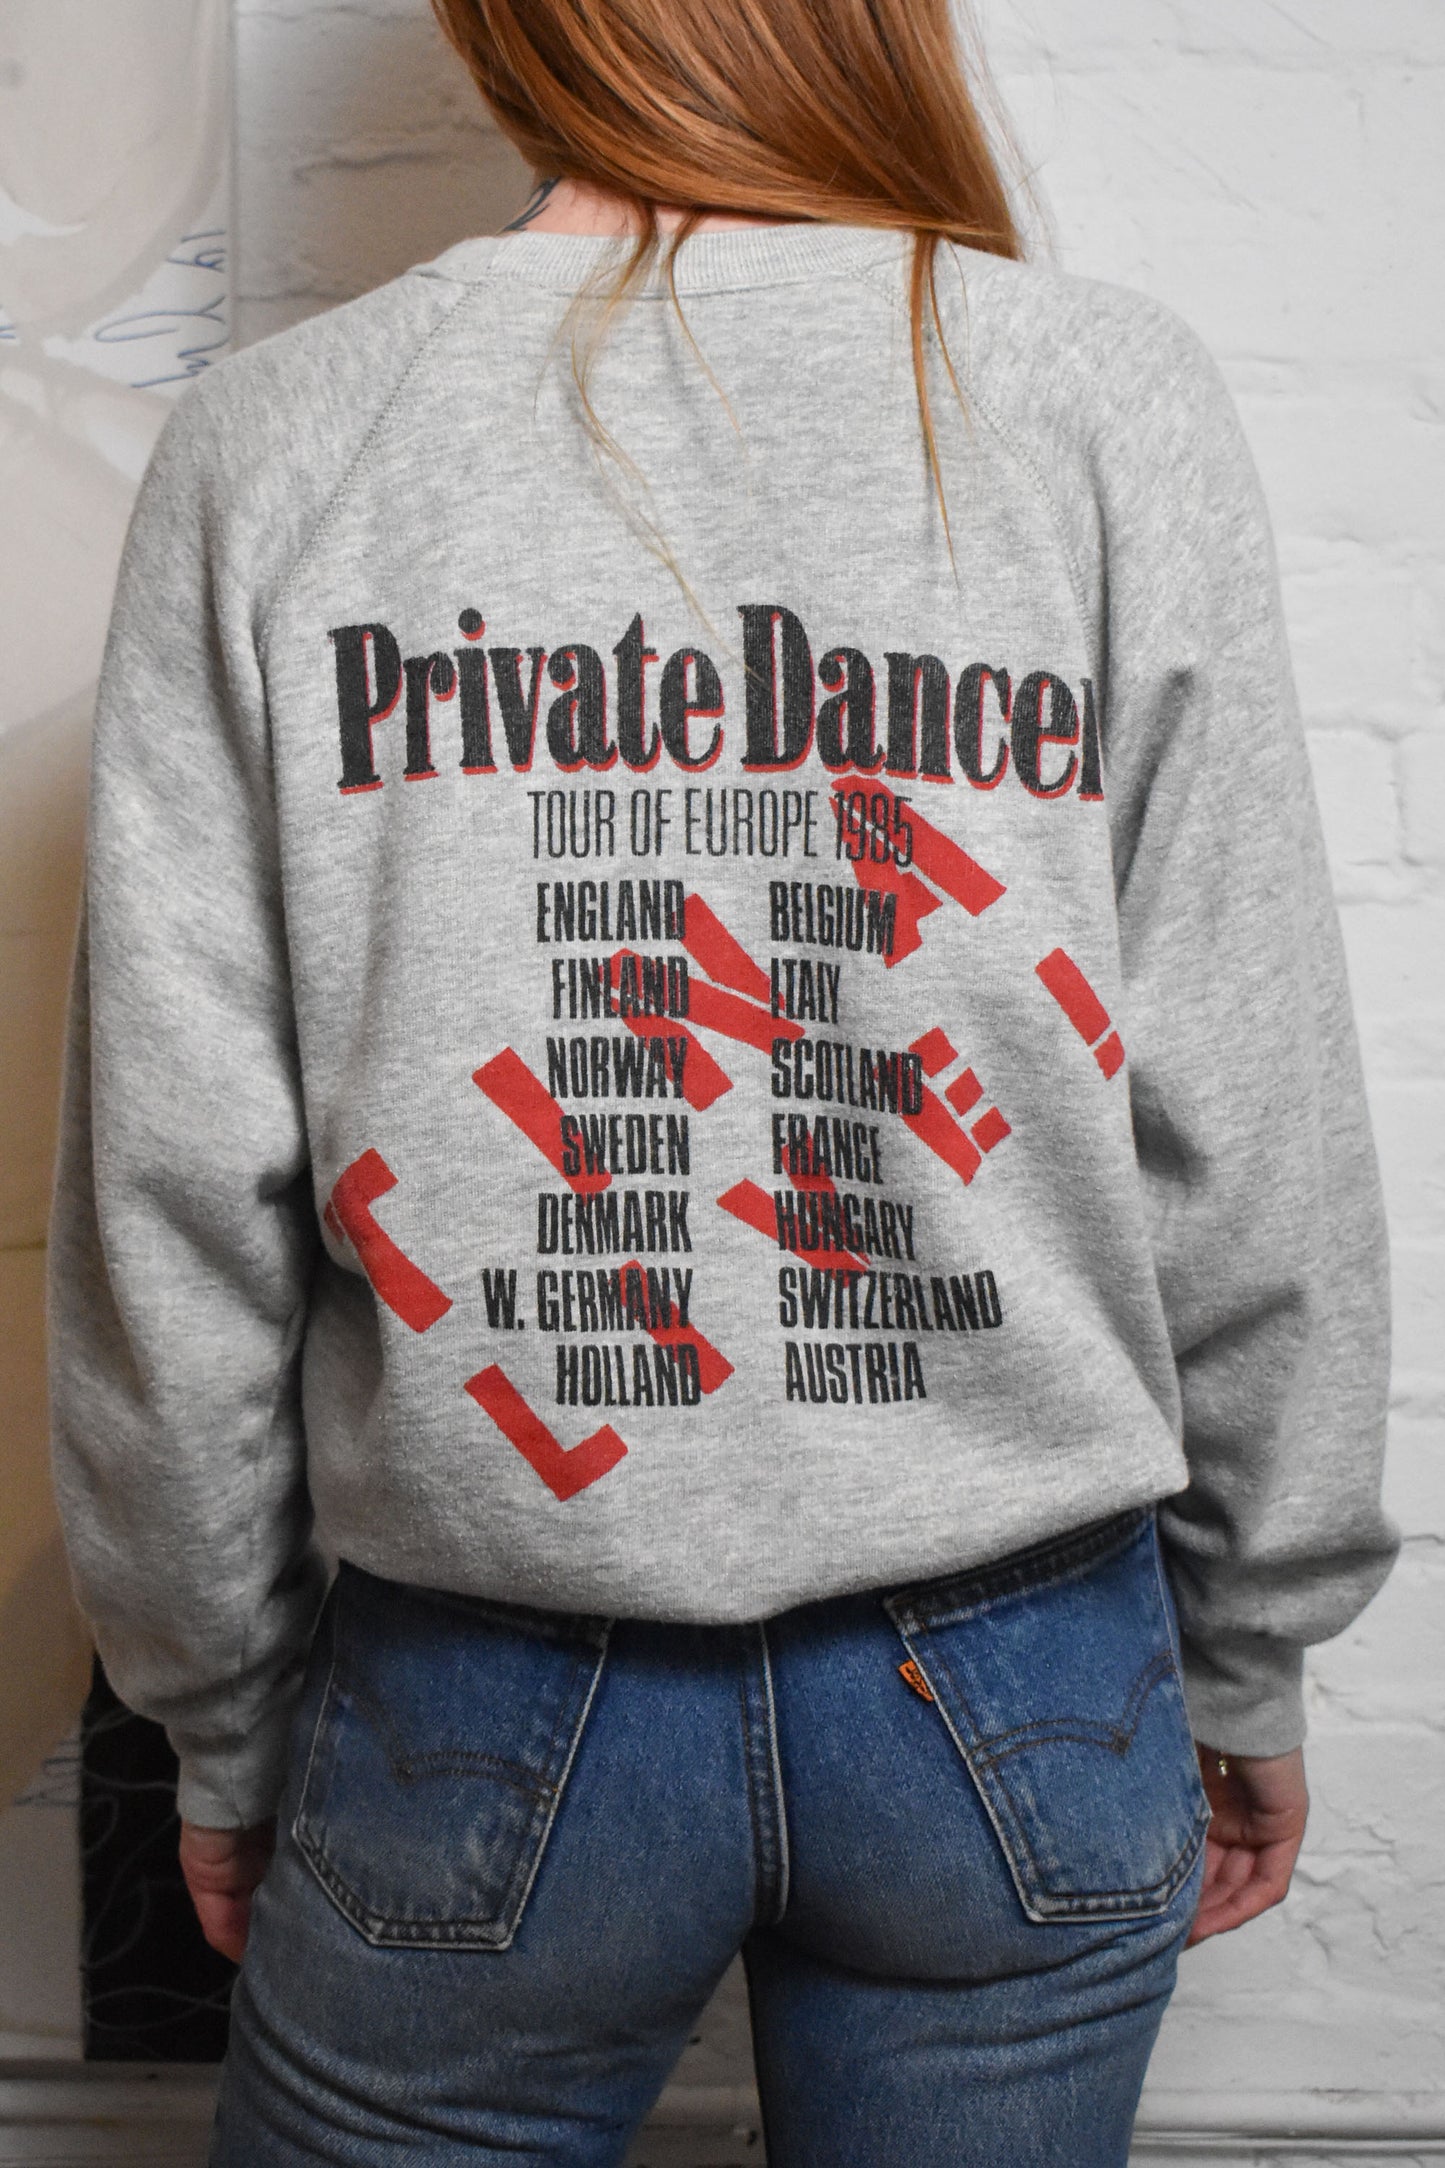 Vintage 1985 "Tina Turner Private Dancer Europe Tour" Sweatshirt